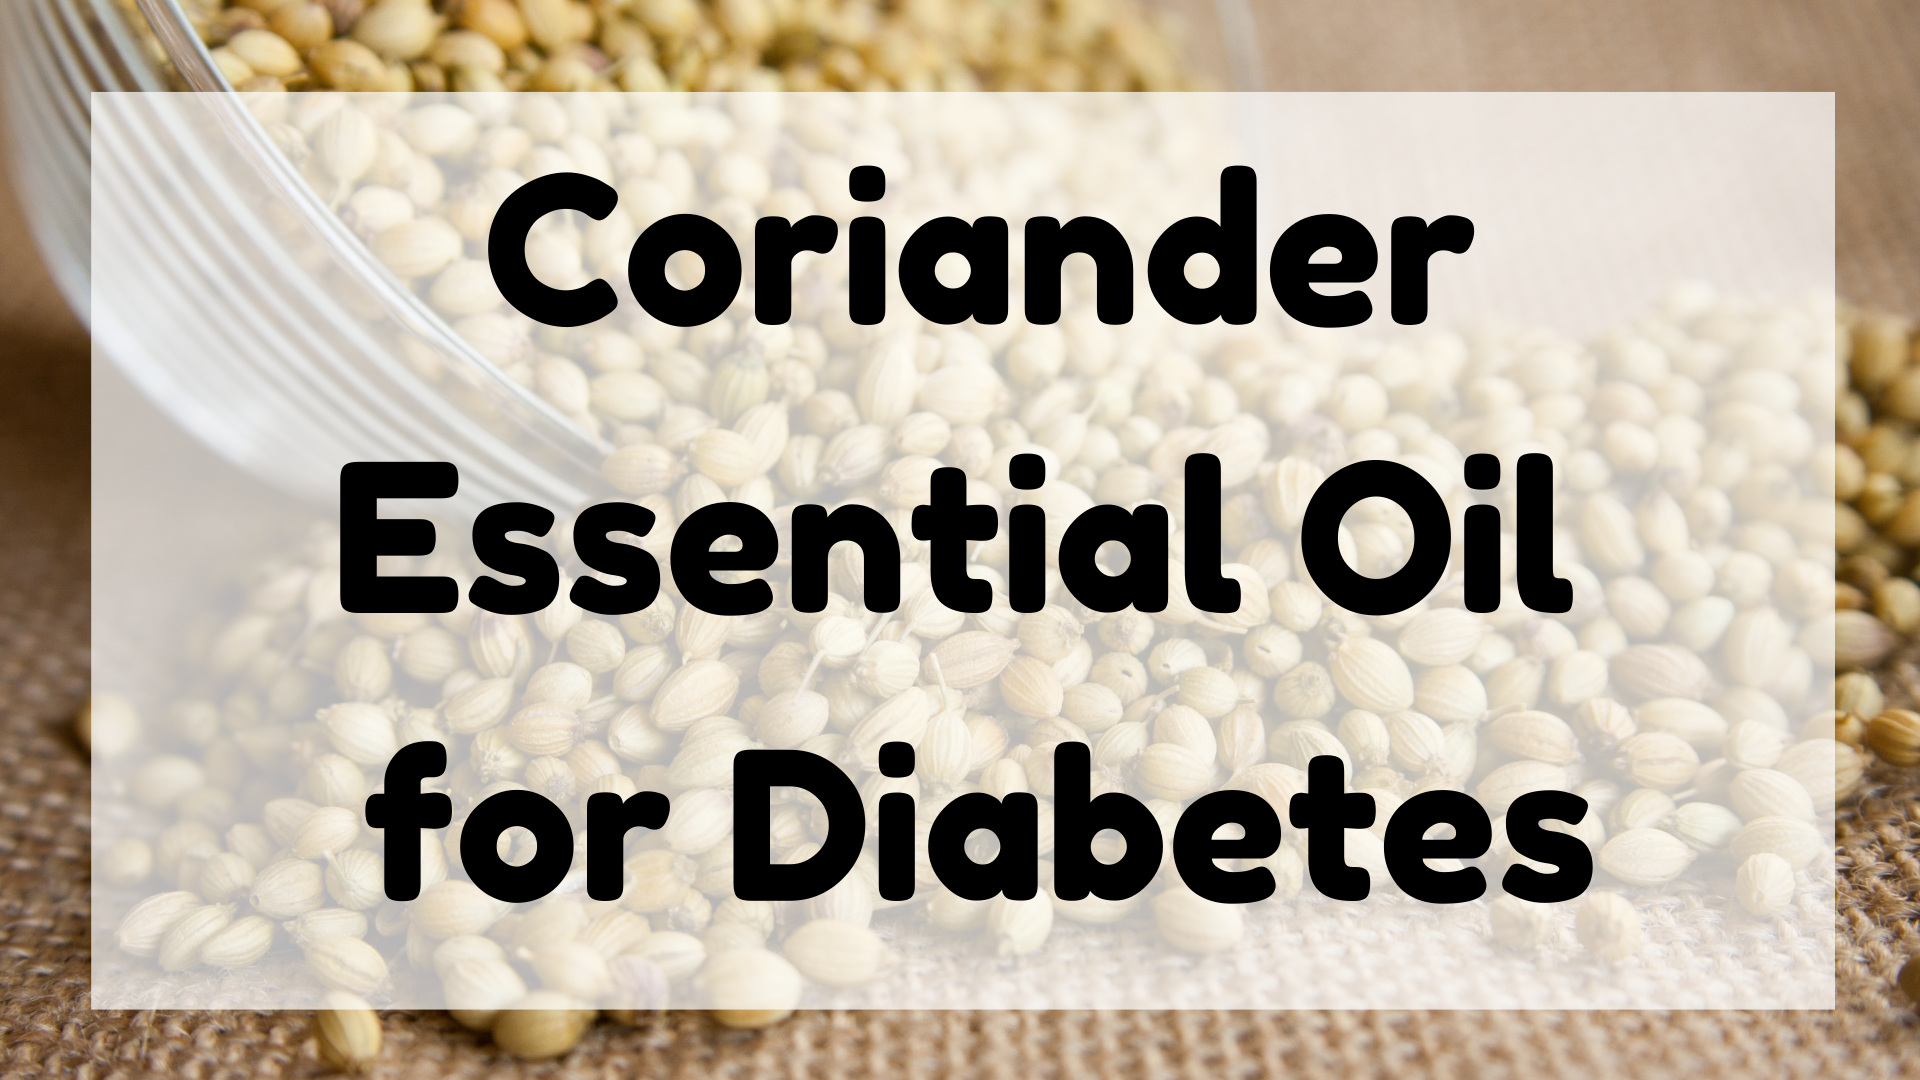 Coriander Essential Oil for Diabetes featured image